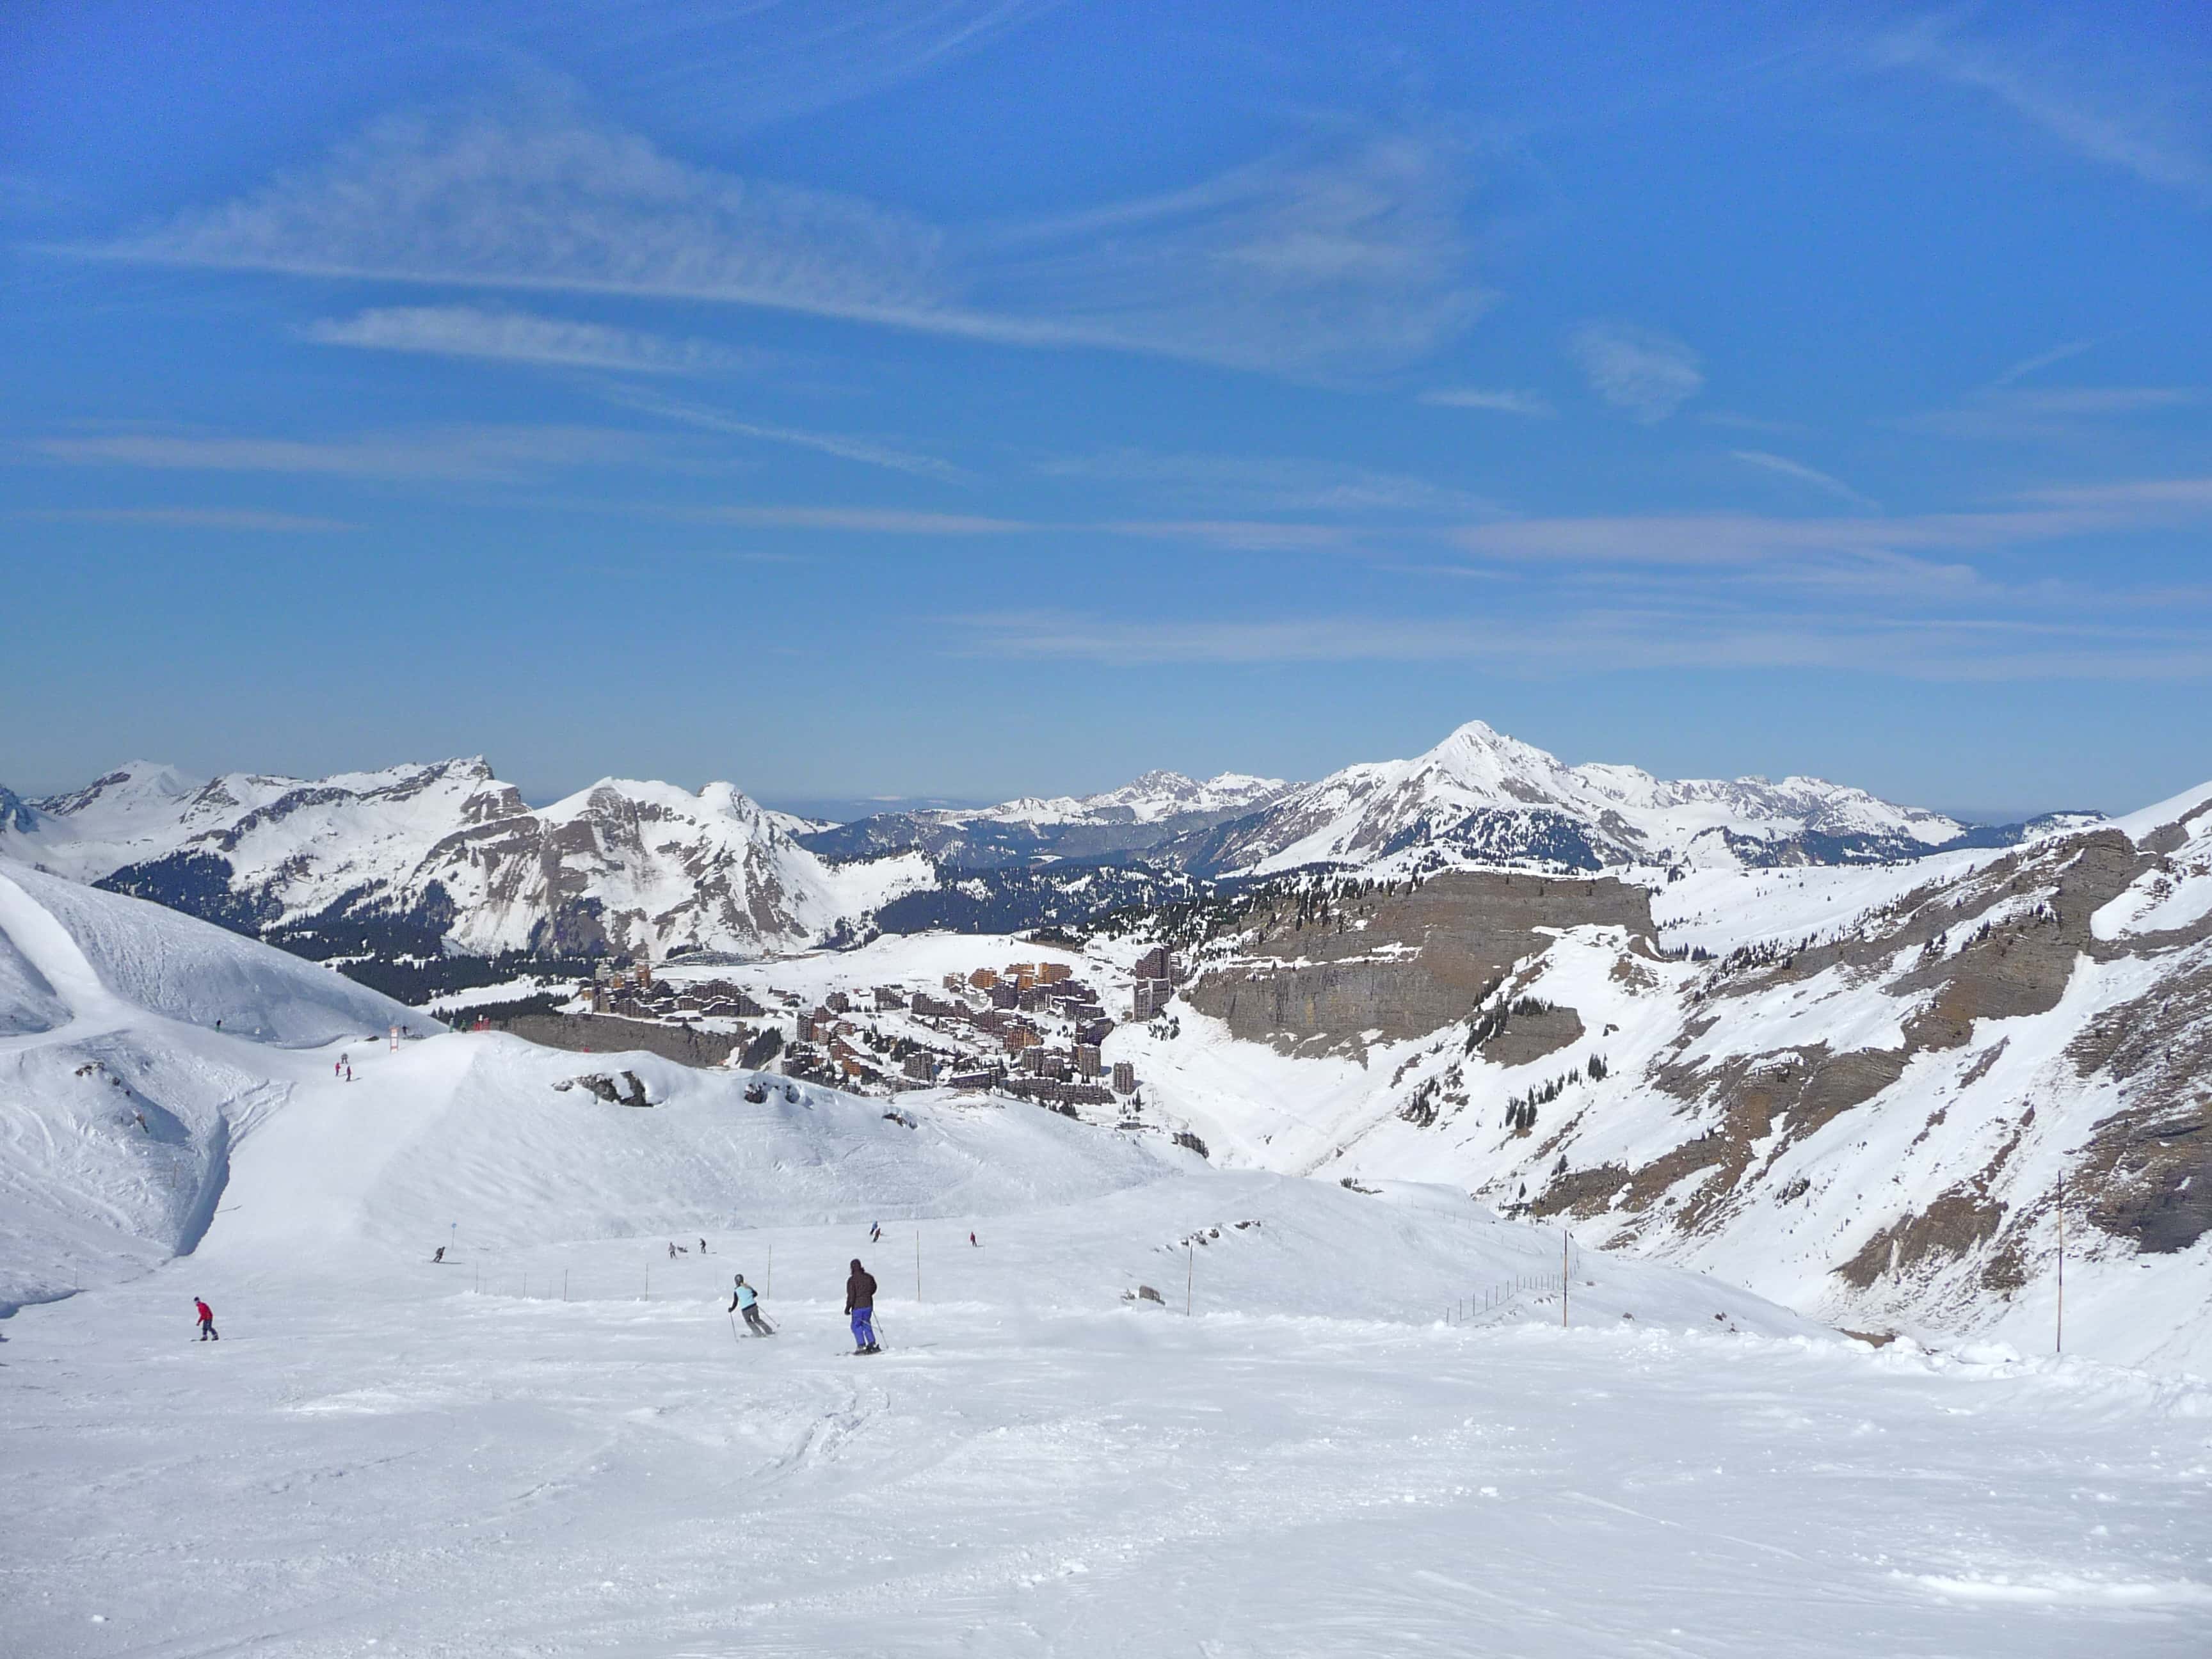 View of Avoriaz ski resort